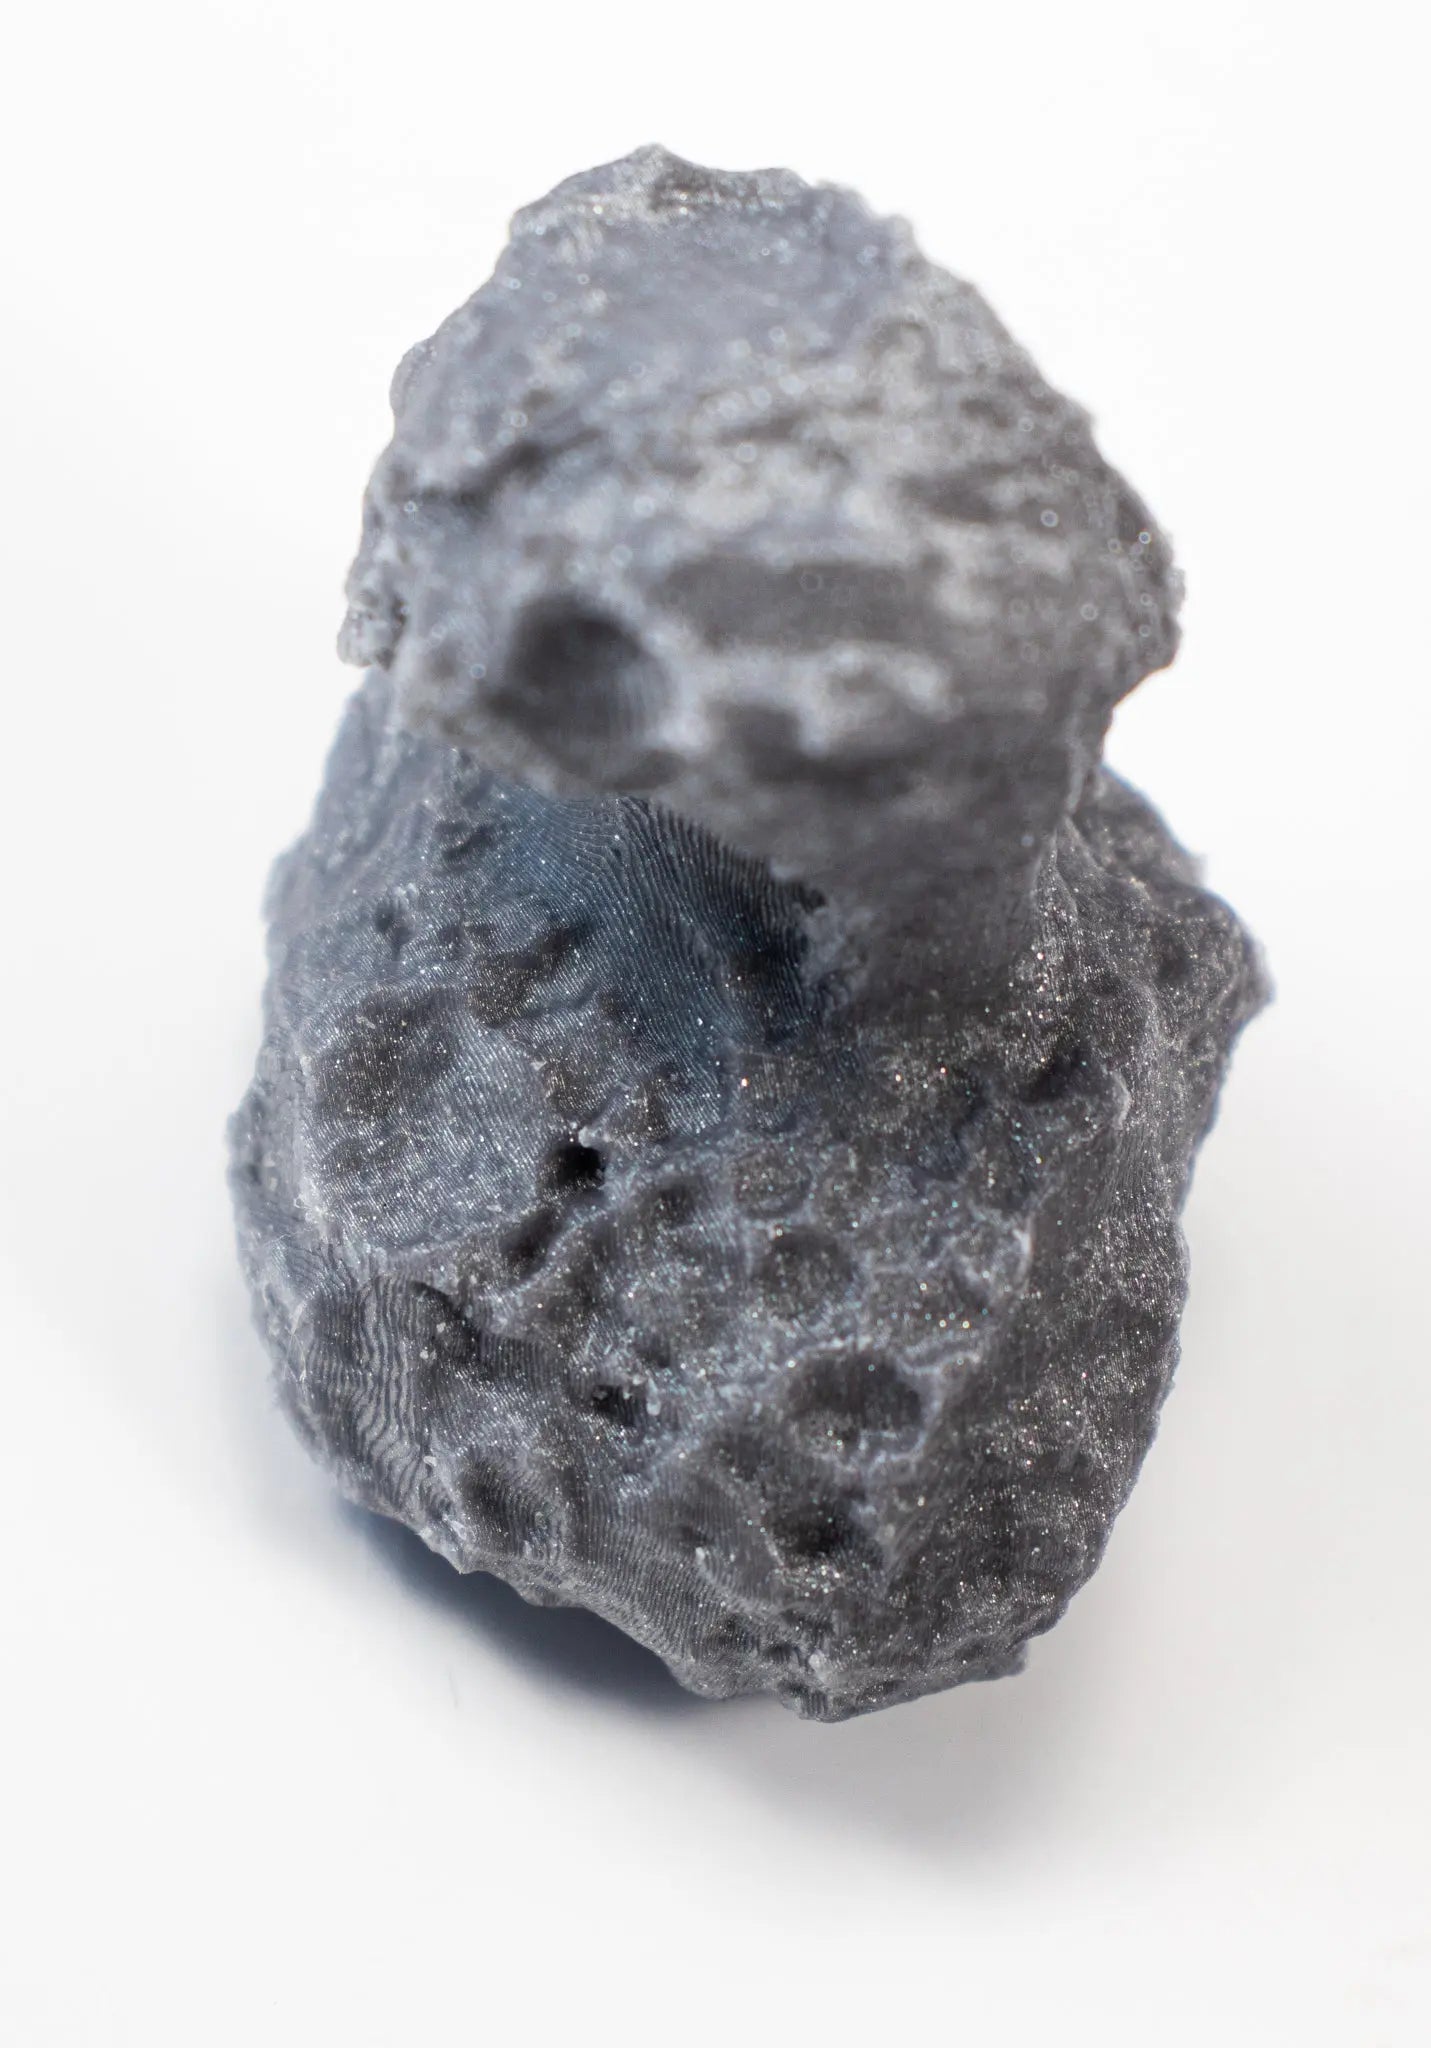 Comet Churyumov–Gerasimenko 3D Model